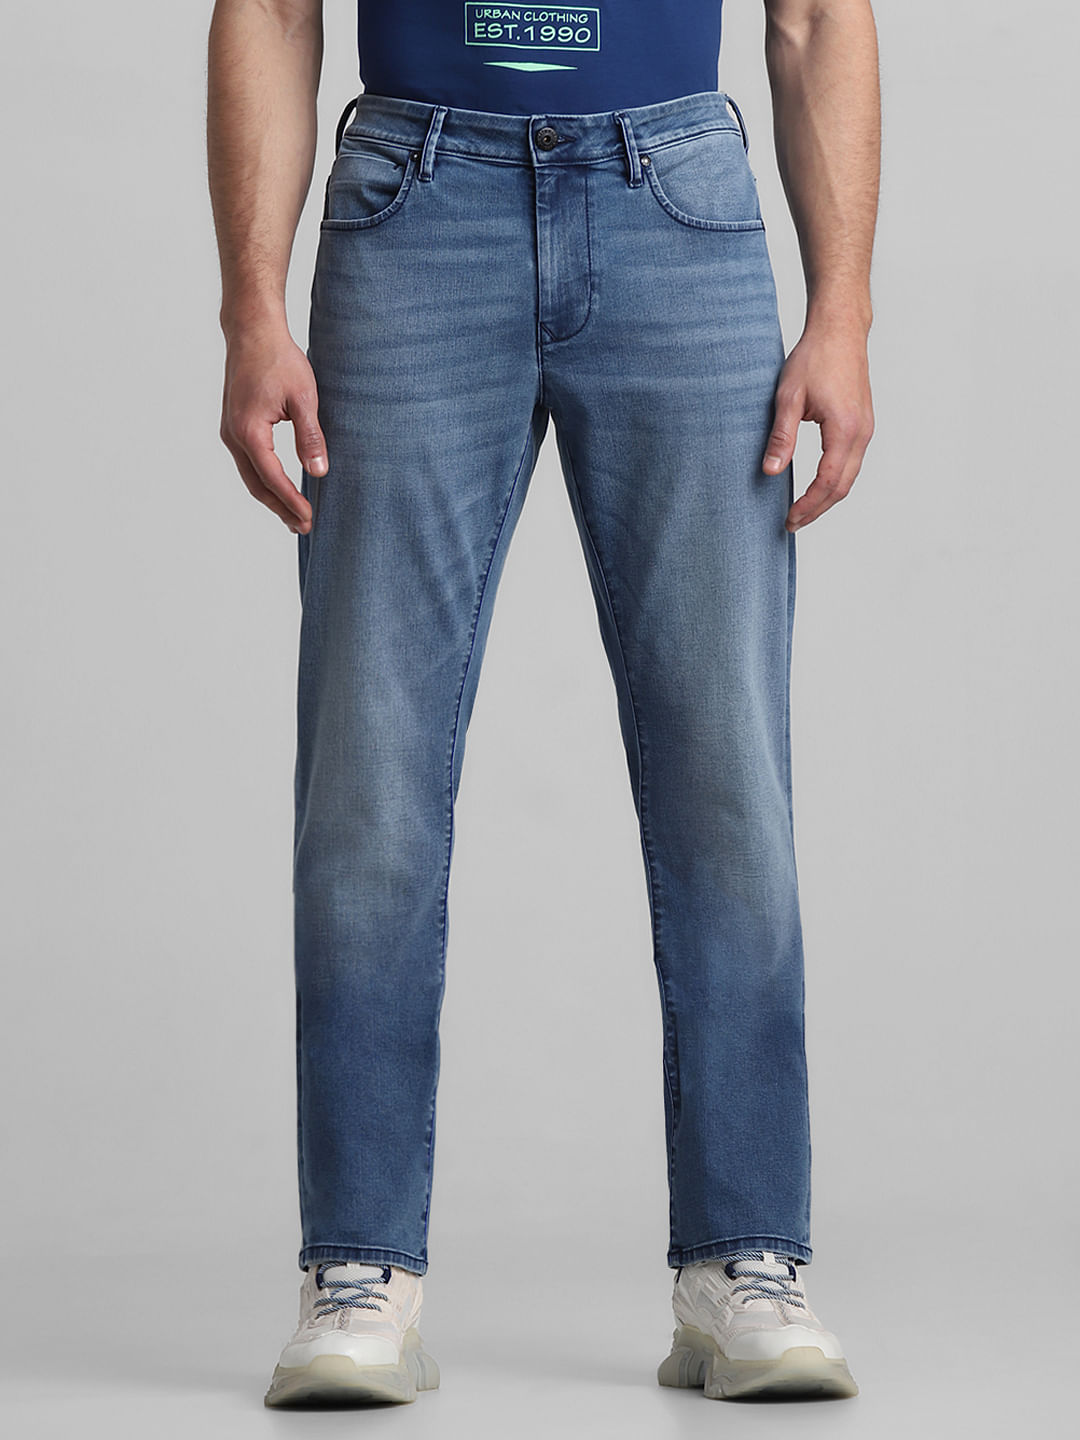 Best Jeans for Men on Sale price 2023 - Zellbury